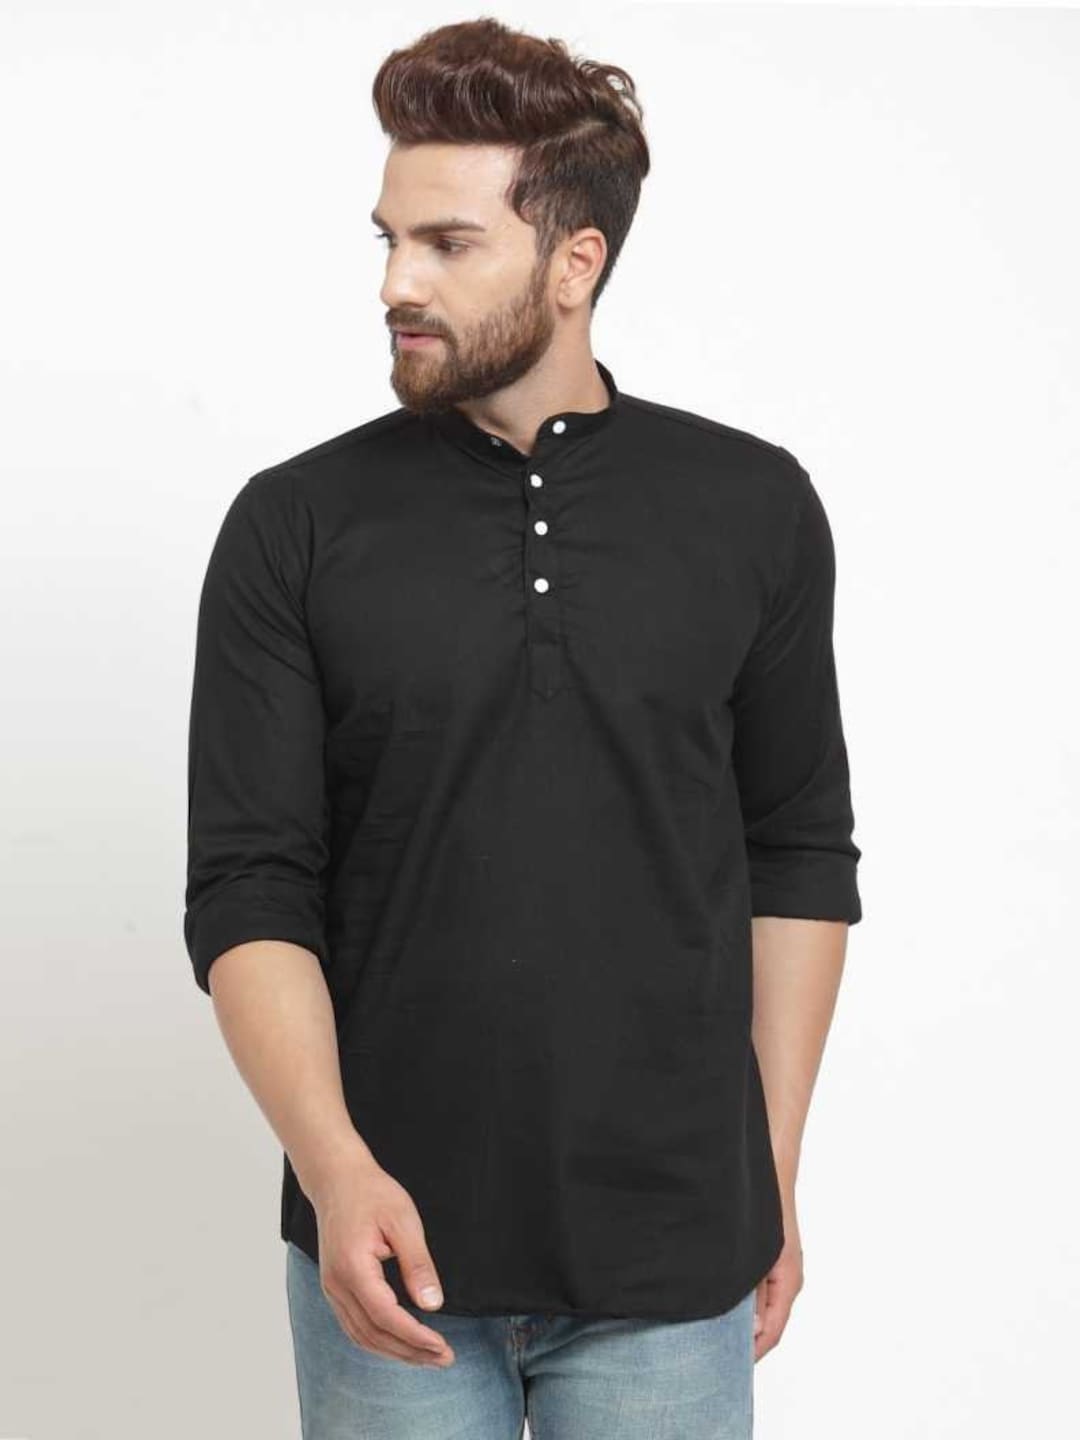 Indian Handmade 100% Cotton Short Black Shirt or Kurta Solid - Etsy